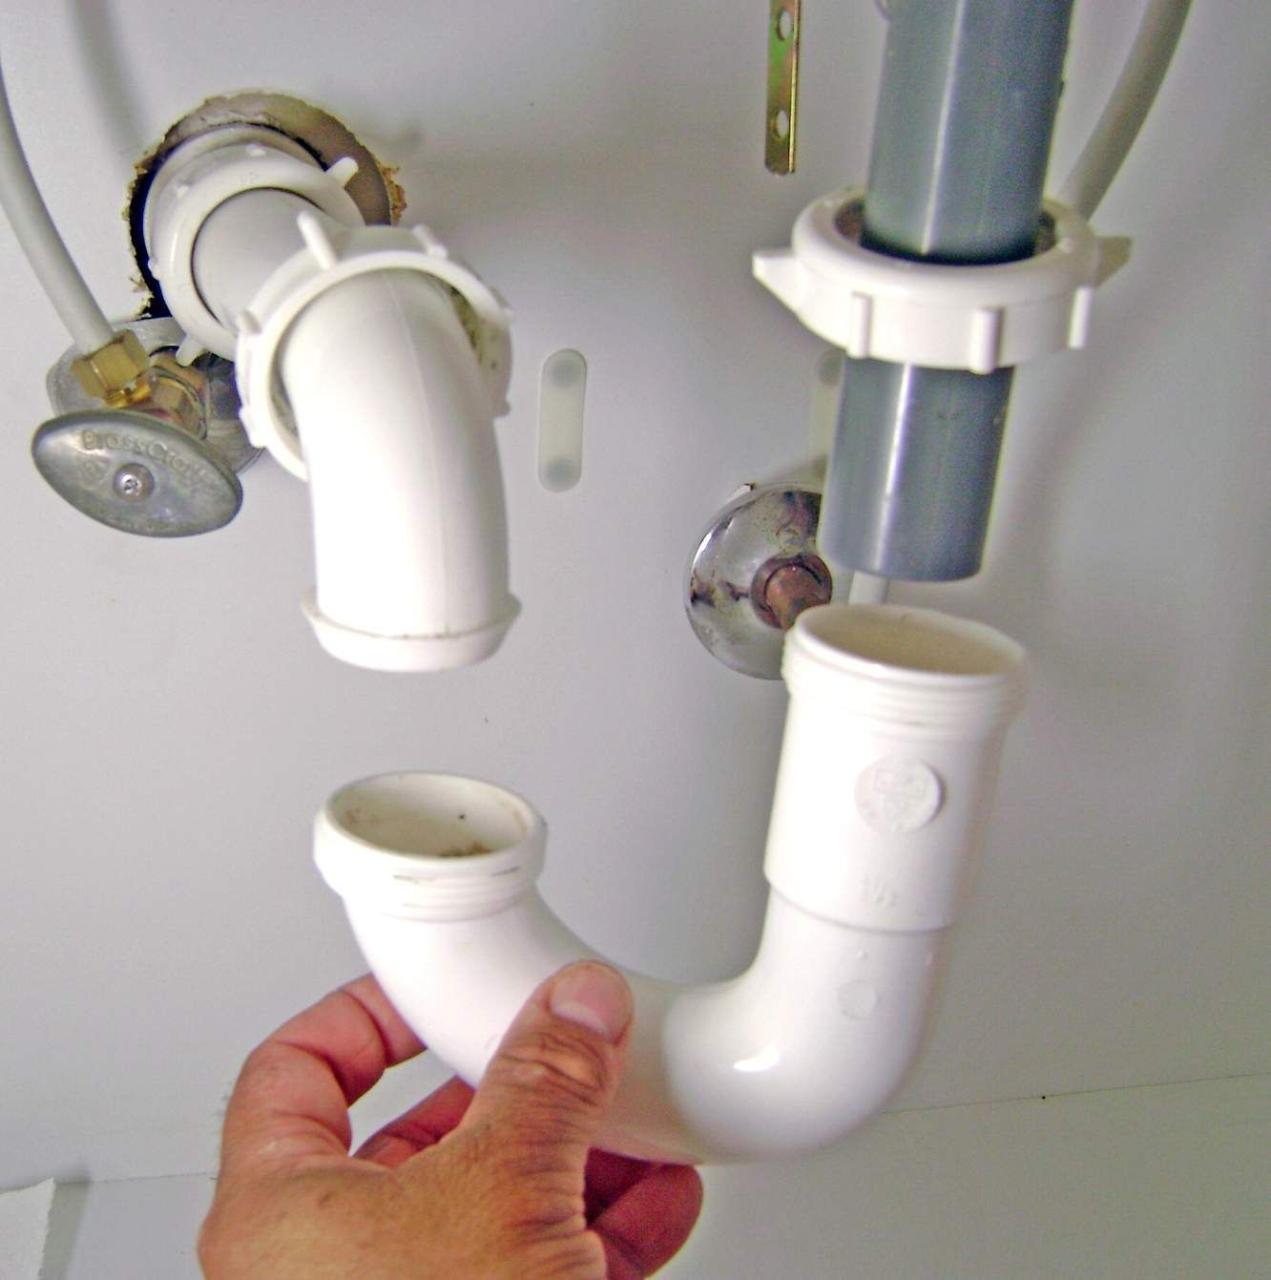 Latest Posts Under: Bathroom sink | Diy home repair, Diy home improvement, Home repair